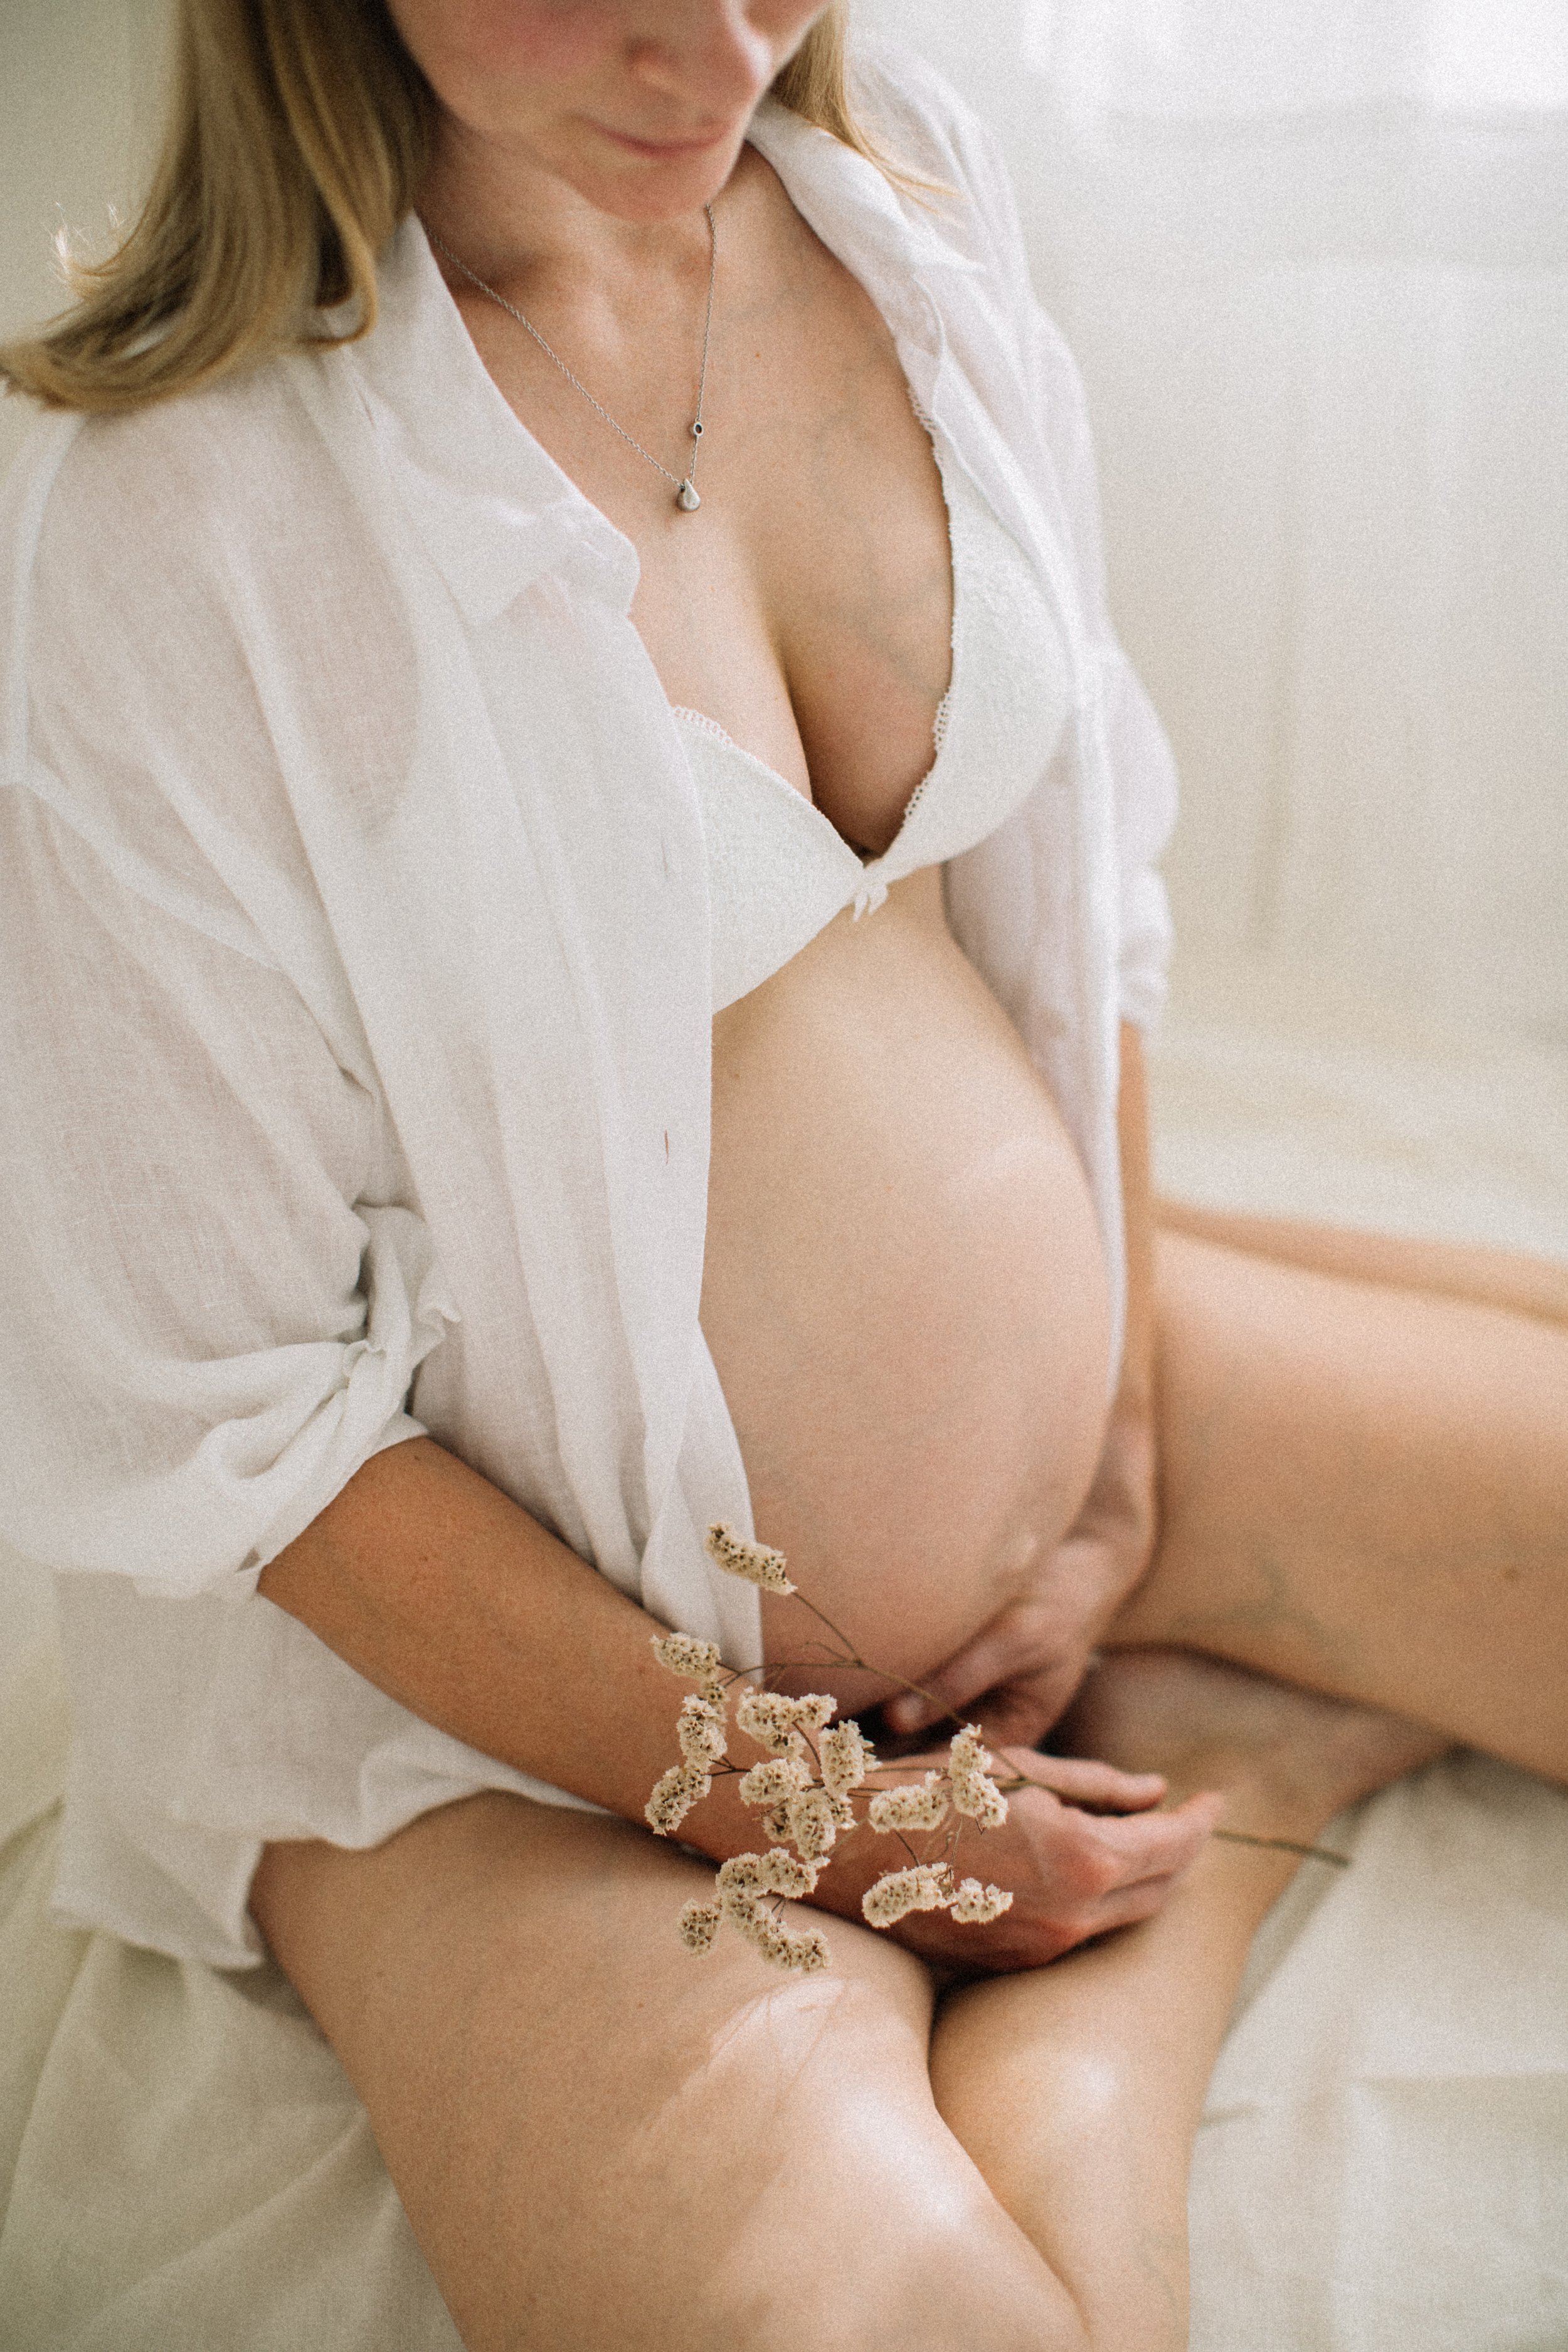 maternity photography wellington.jpg